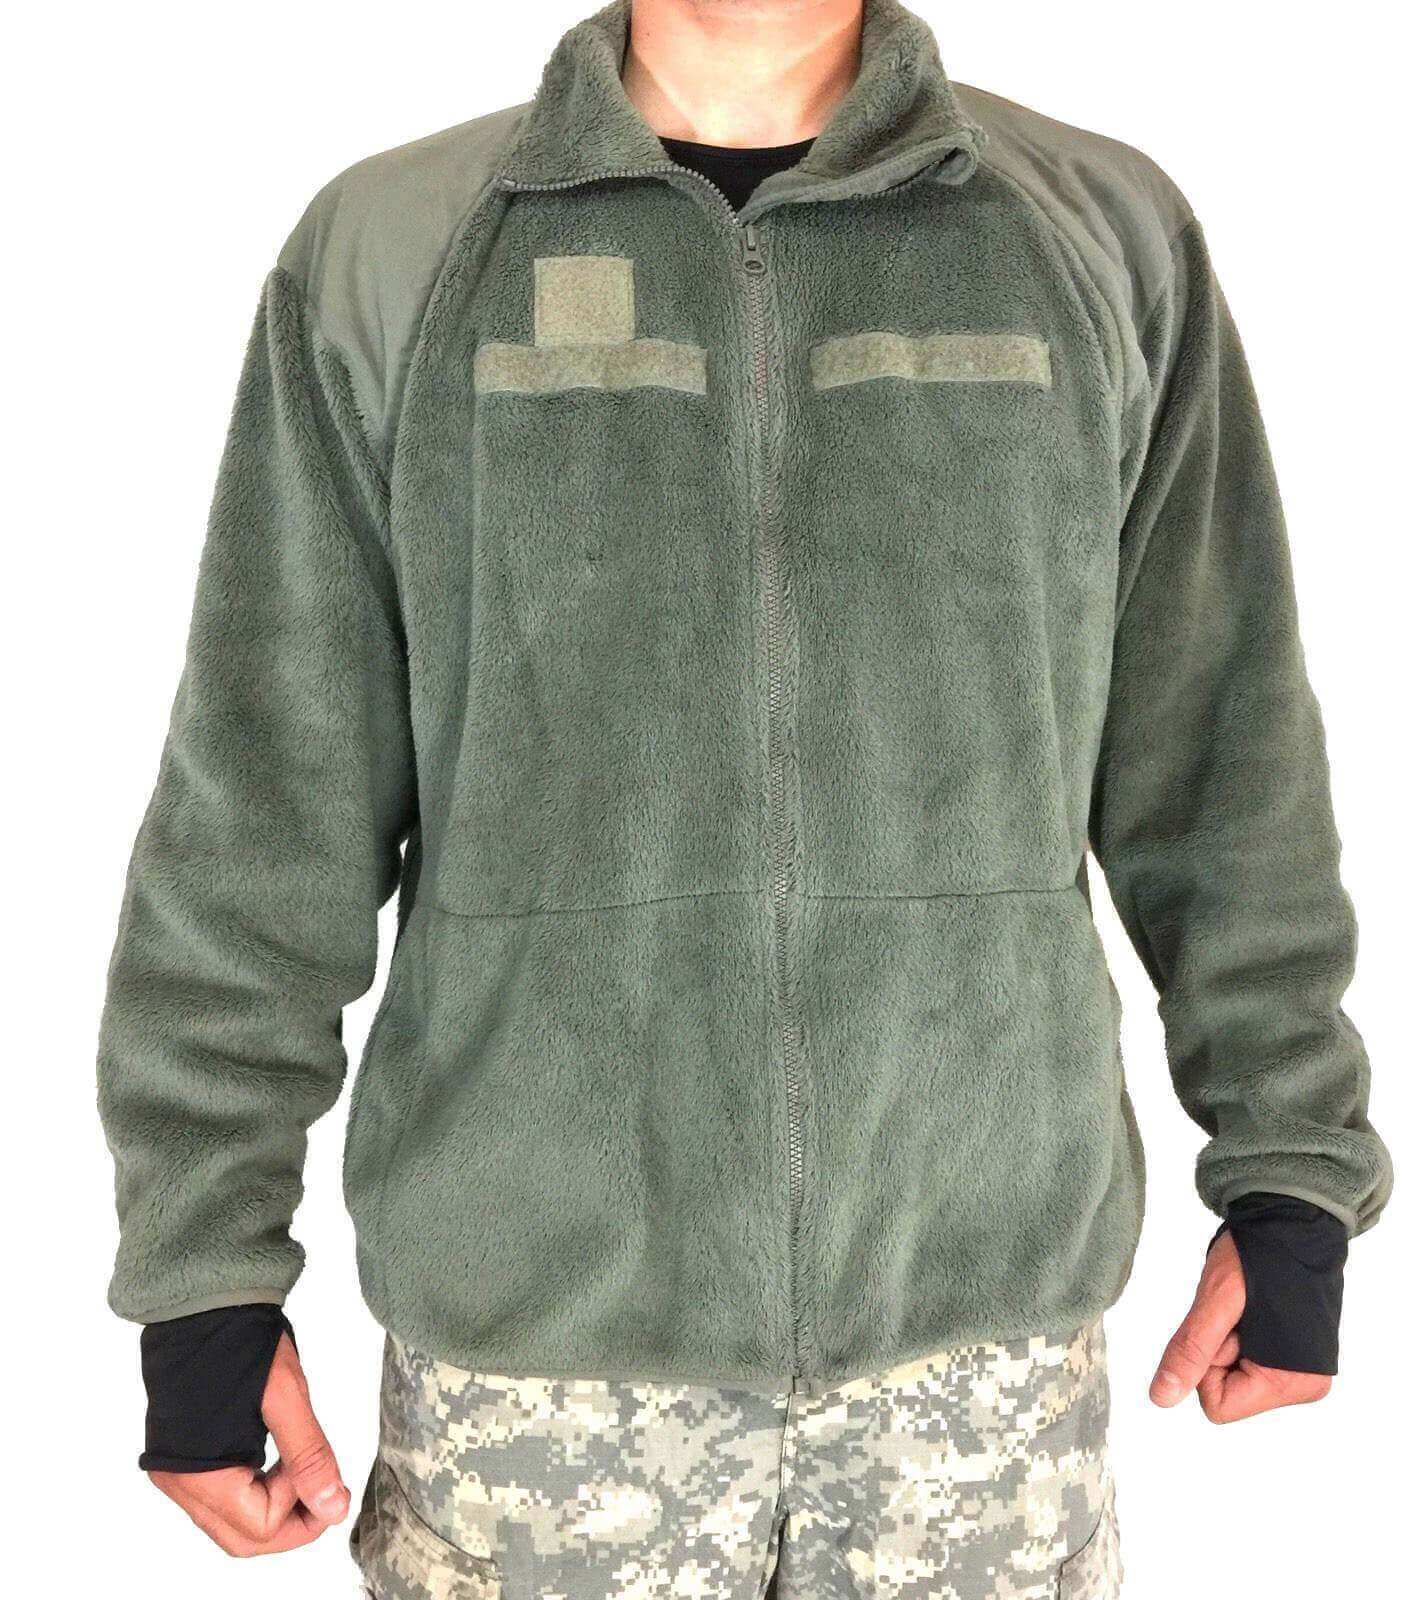 New Polartec U.S Military Surplus Gen III Fleece Jacket Foliage Green Small Long 